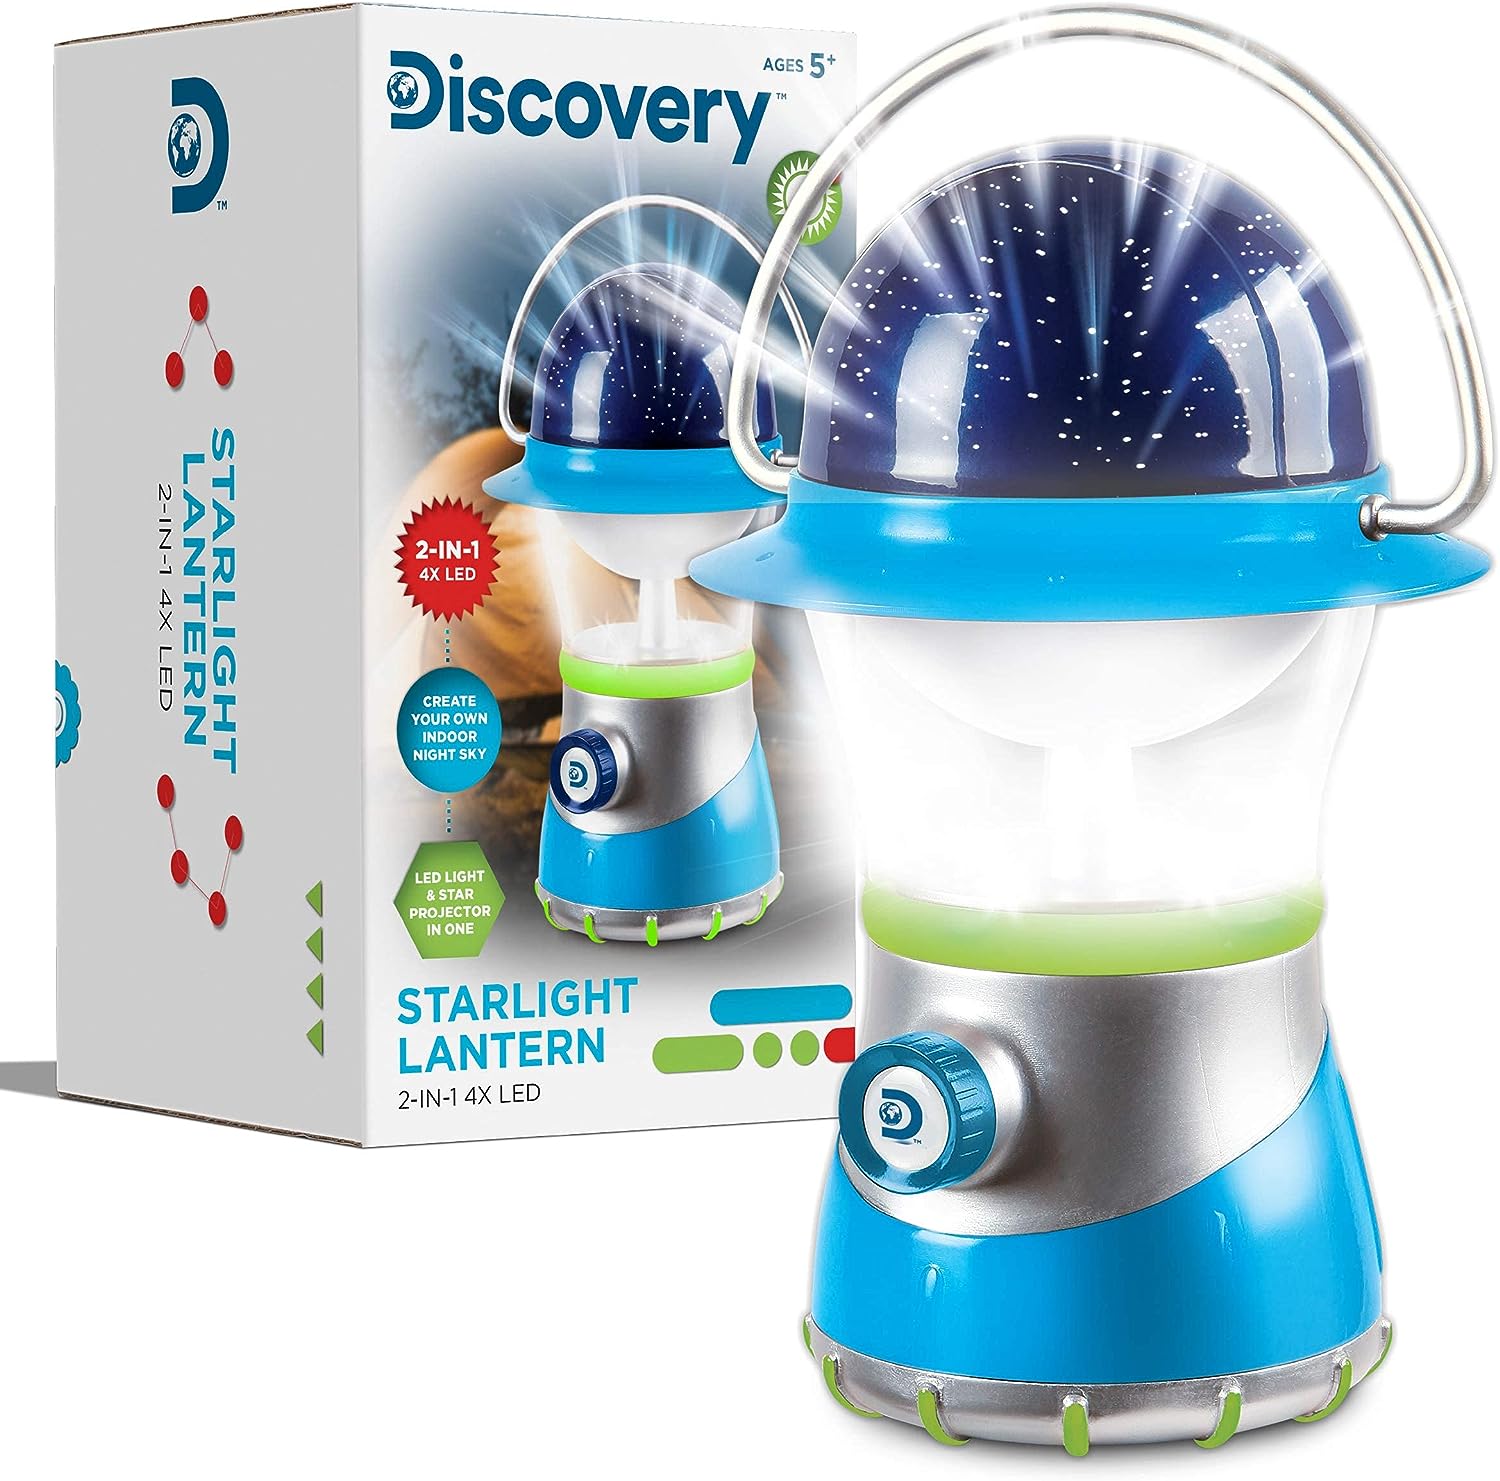 Discovery Starlight Lantern